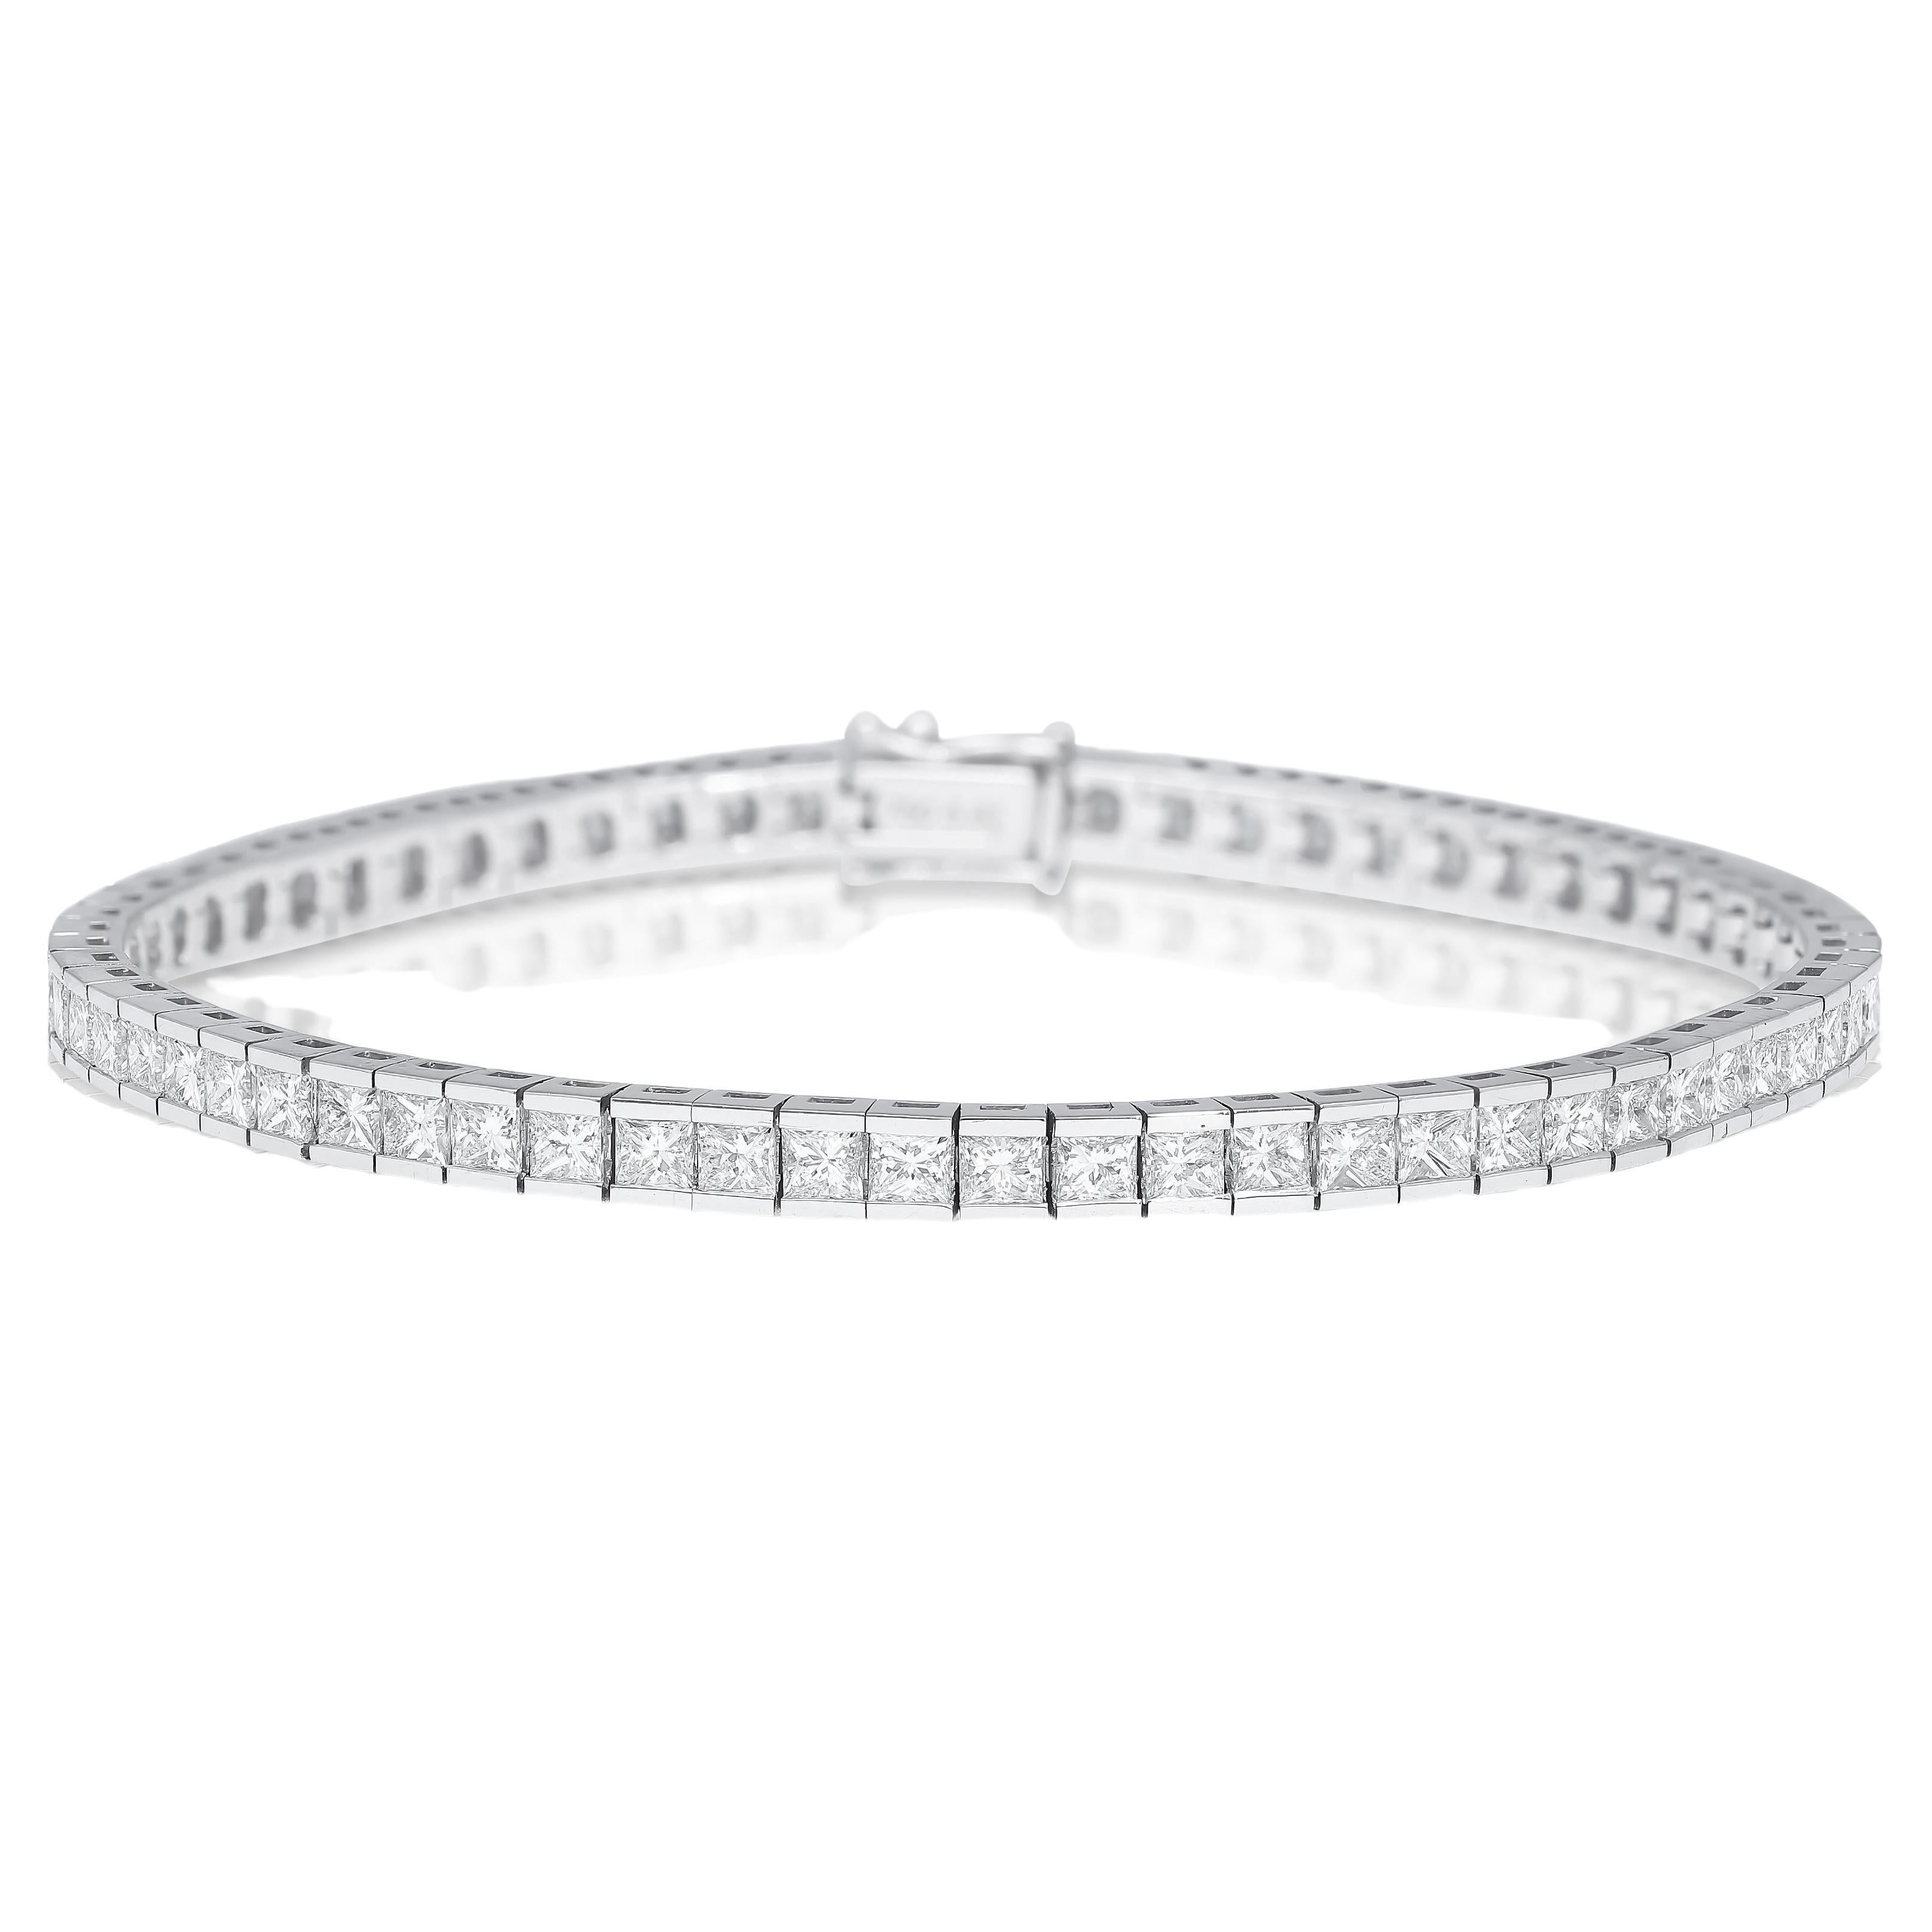 4.7 Carat Princess Cut Diamond Half Bezel Tennis Bracelet in 18K White Gold 7"